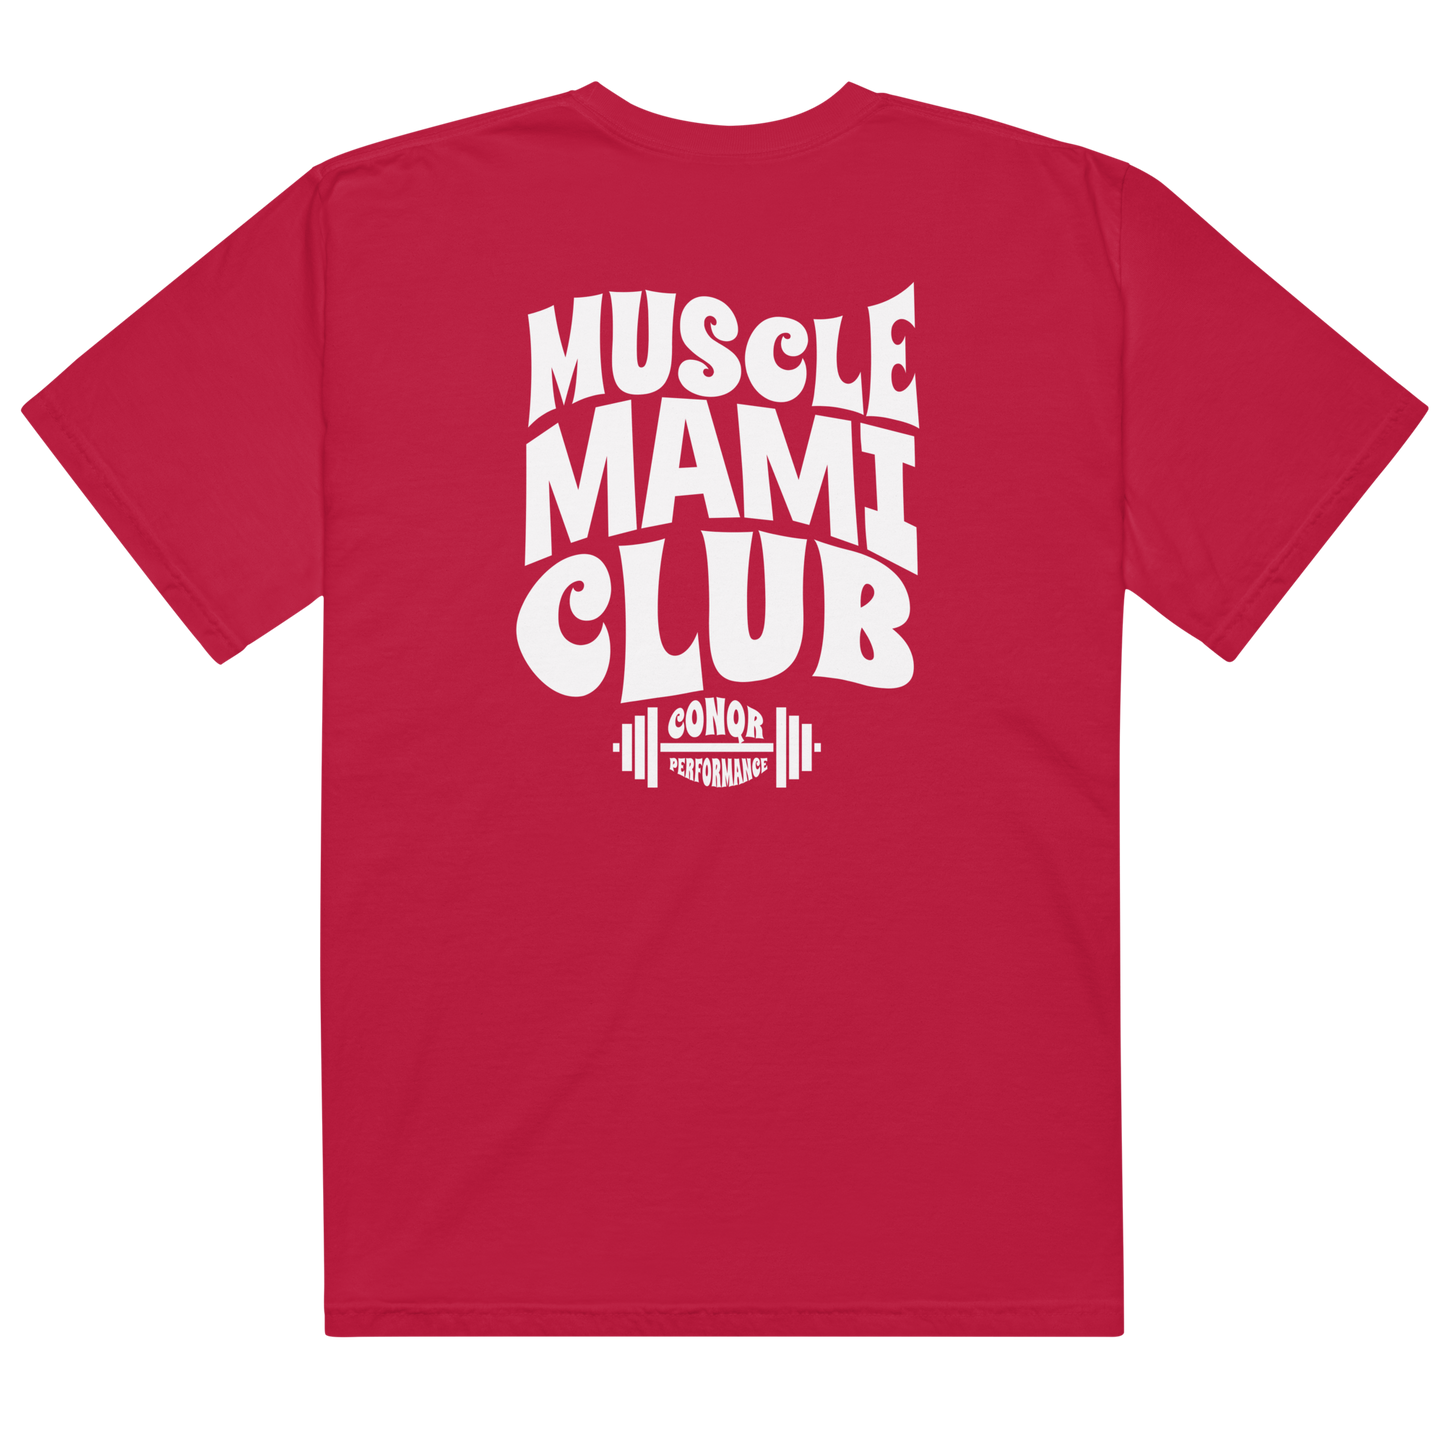 Muscle Mami Club heavyweight pump cover